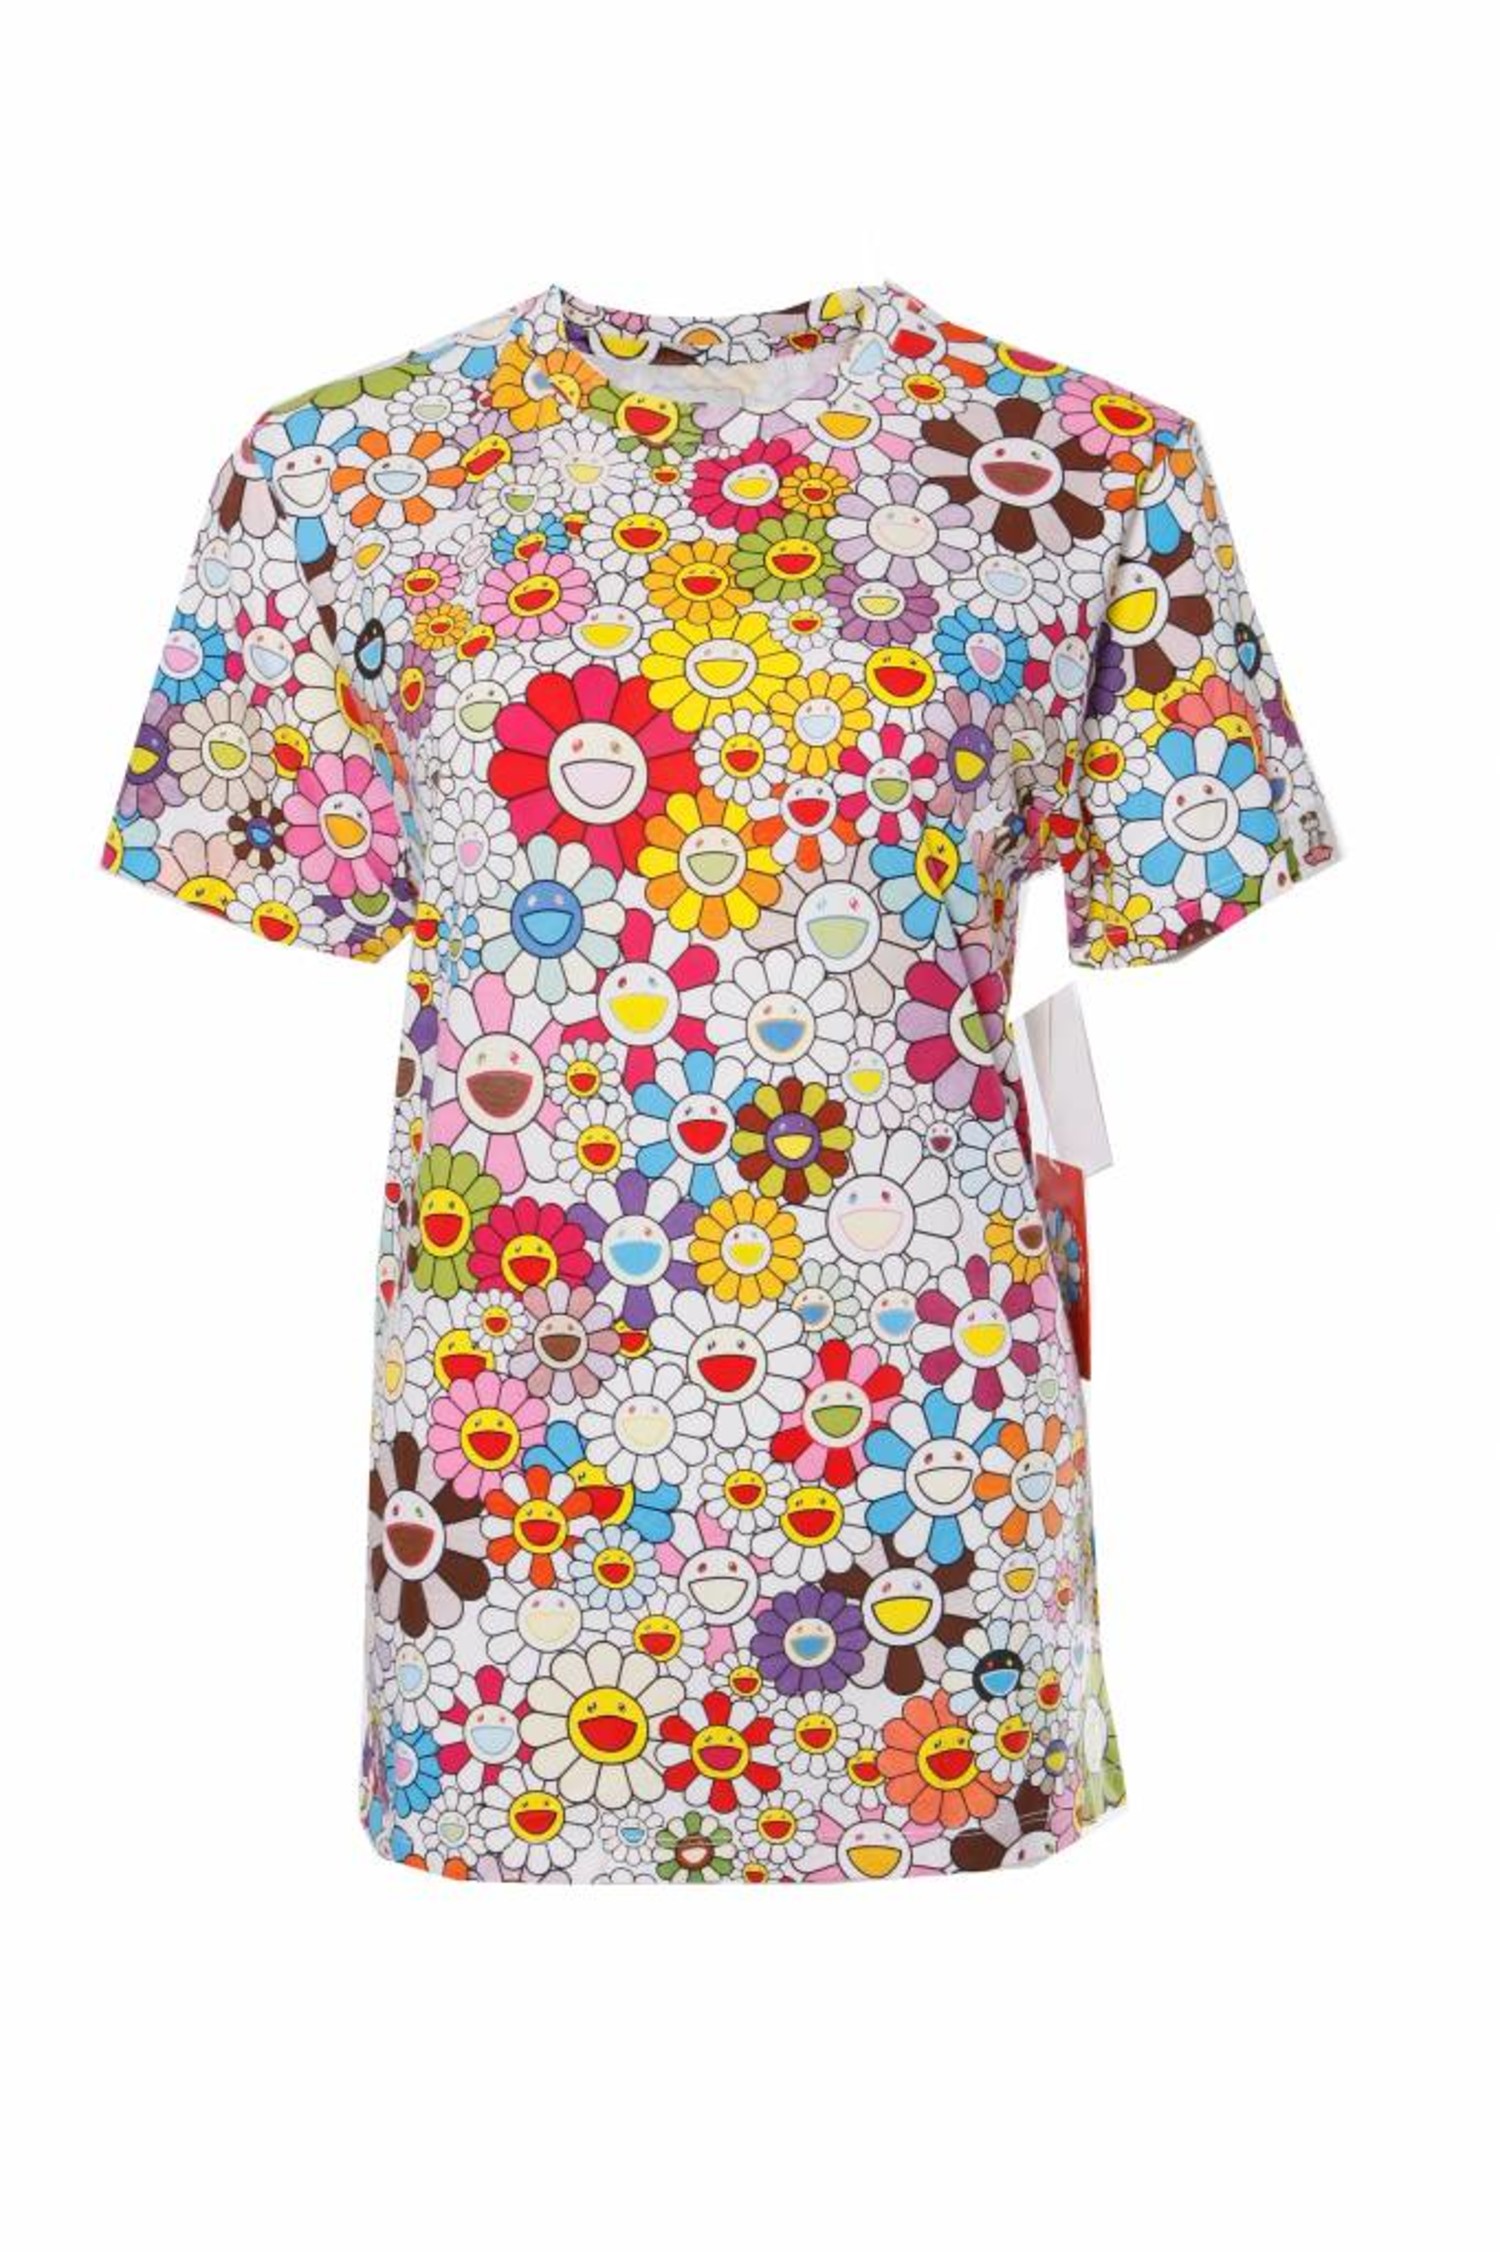 VAULT BY VANS X TAKASHI MURAKAMI, flower pattern crew neck T-shirt